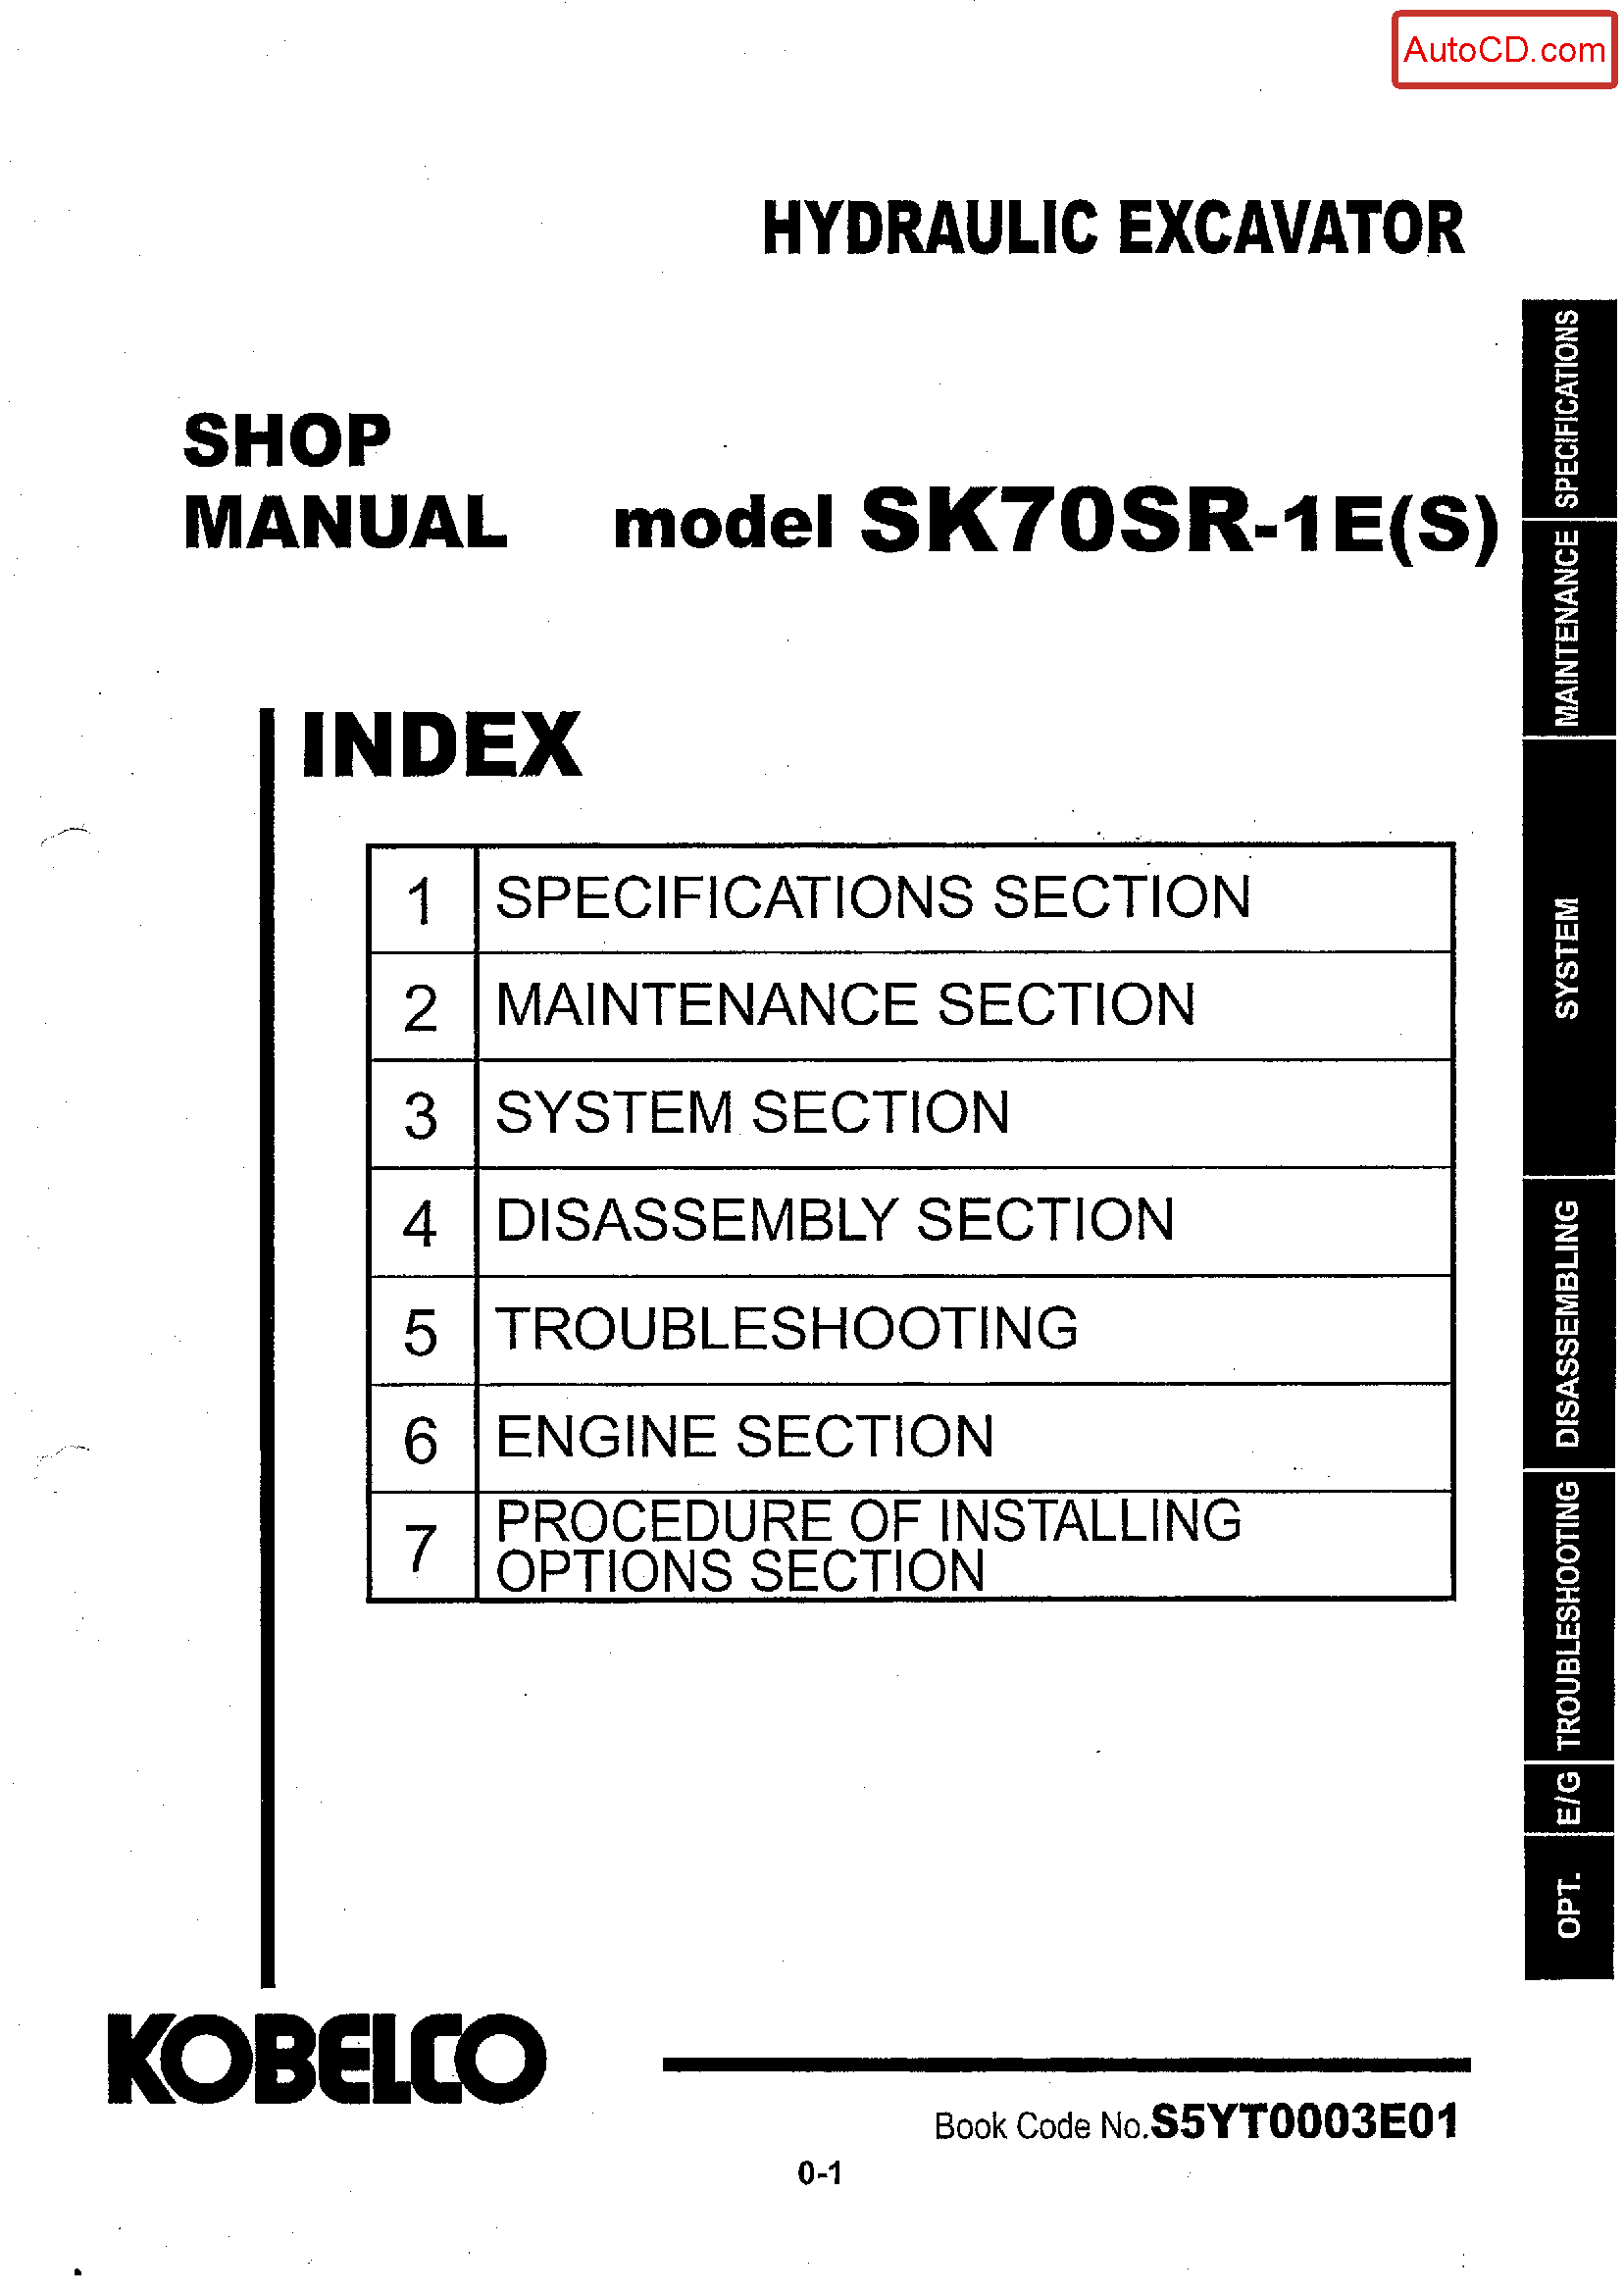 Kobelco SK70SR-1E(S) Hydraulic Excavator Service Manual